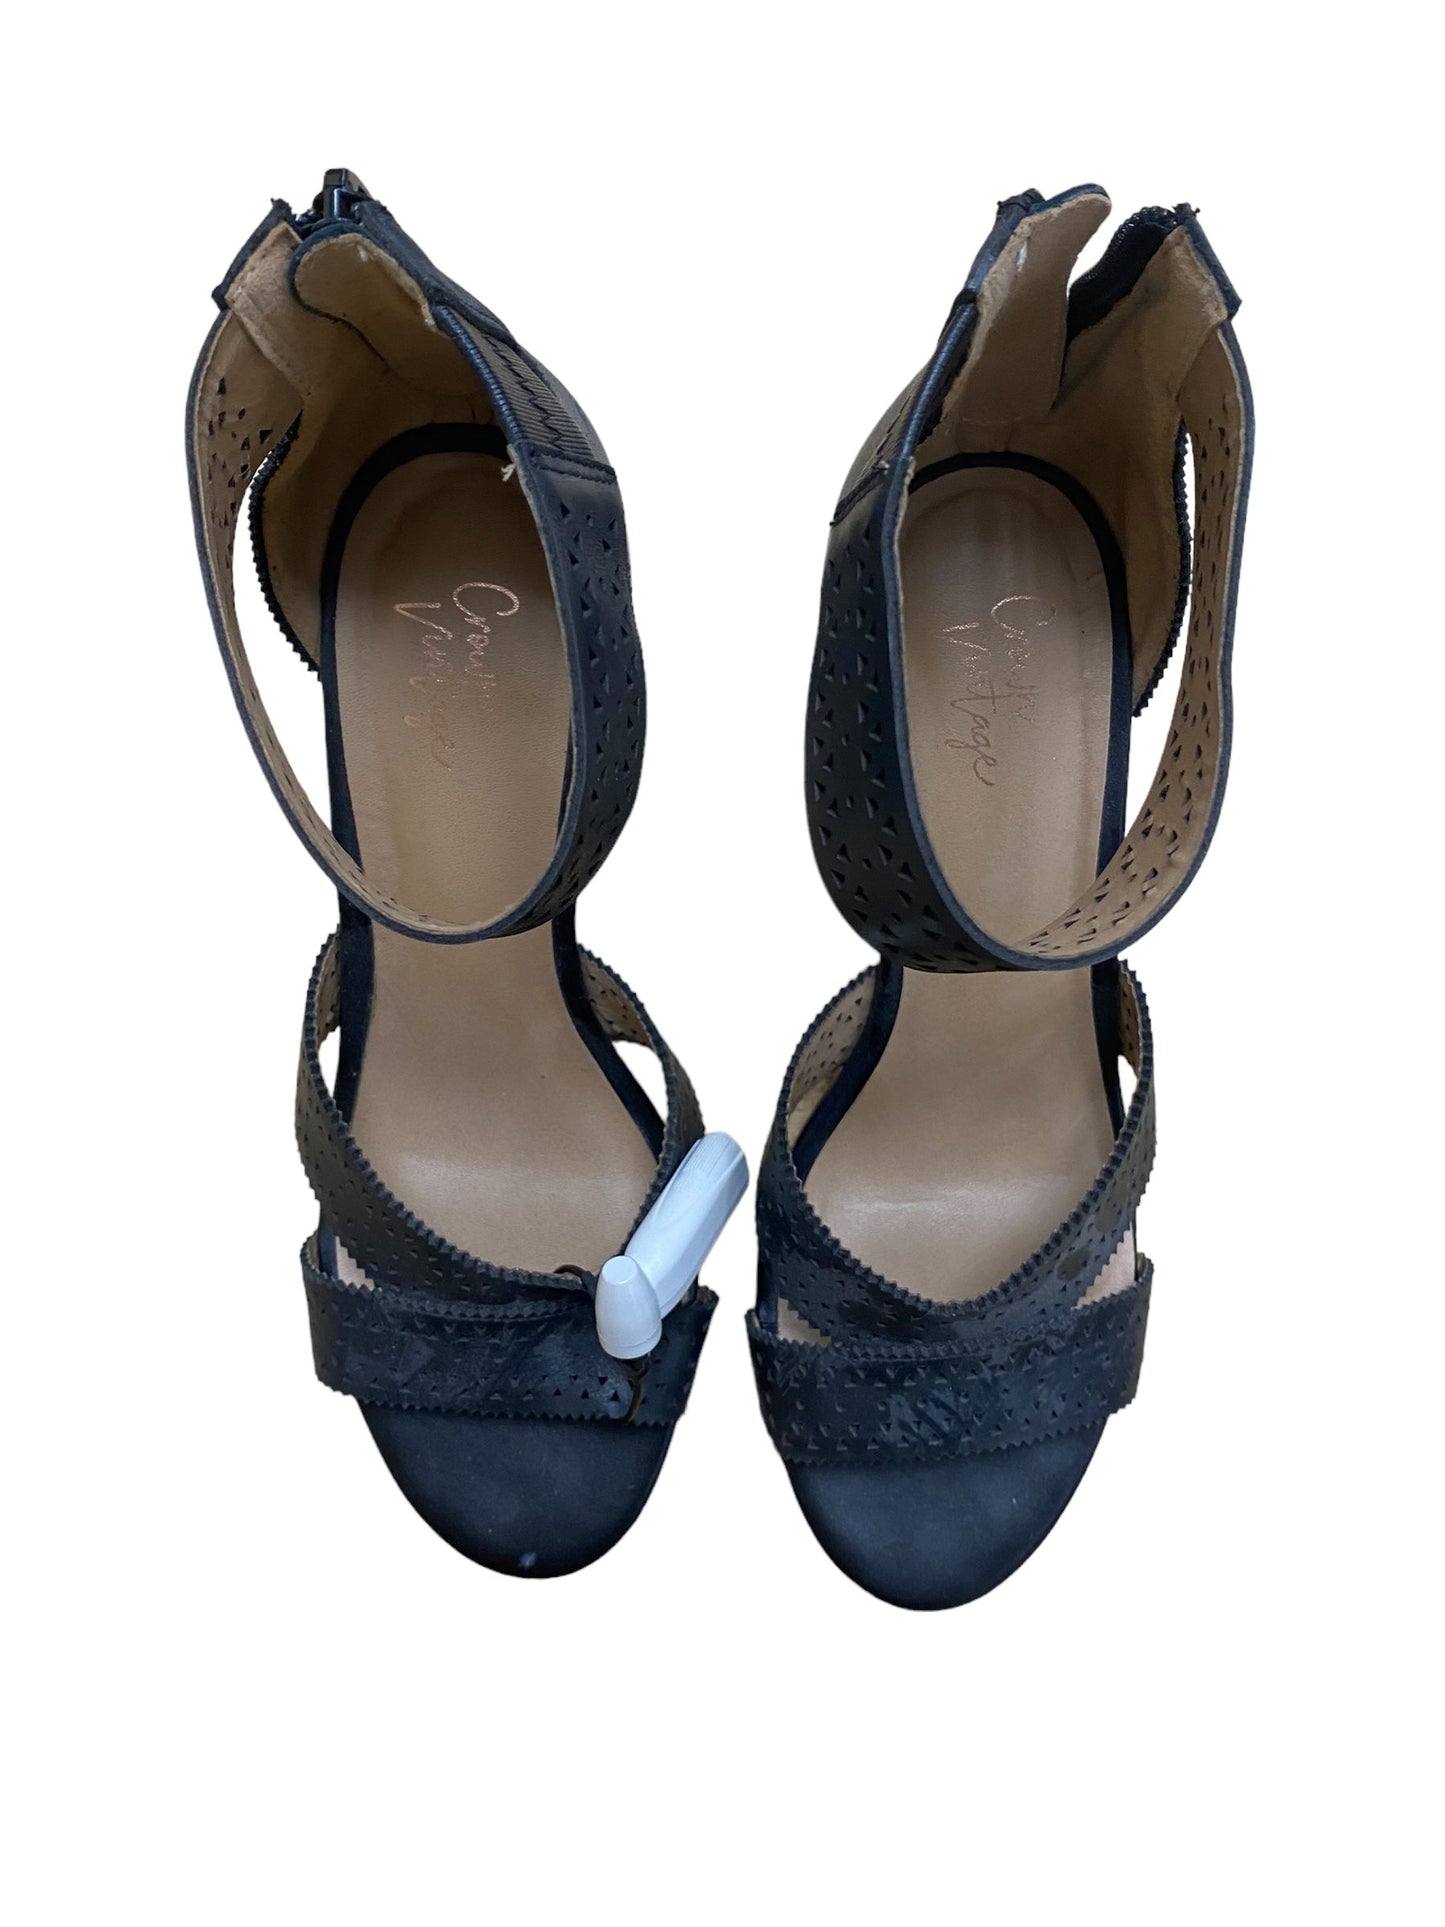 Shoes Heels Wedge By Crown Vintage  Size: 9.5